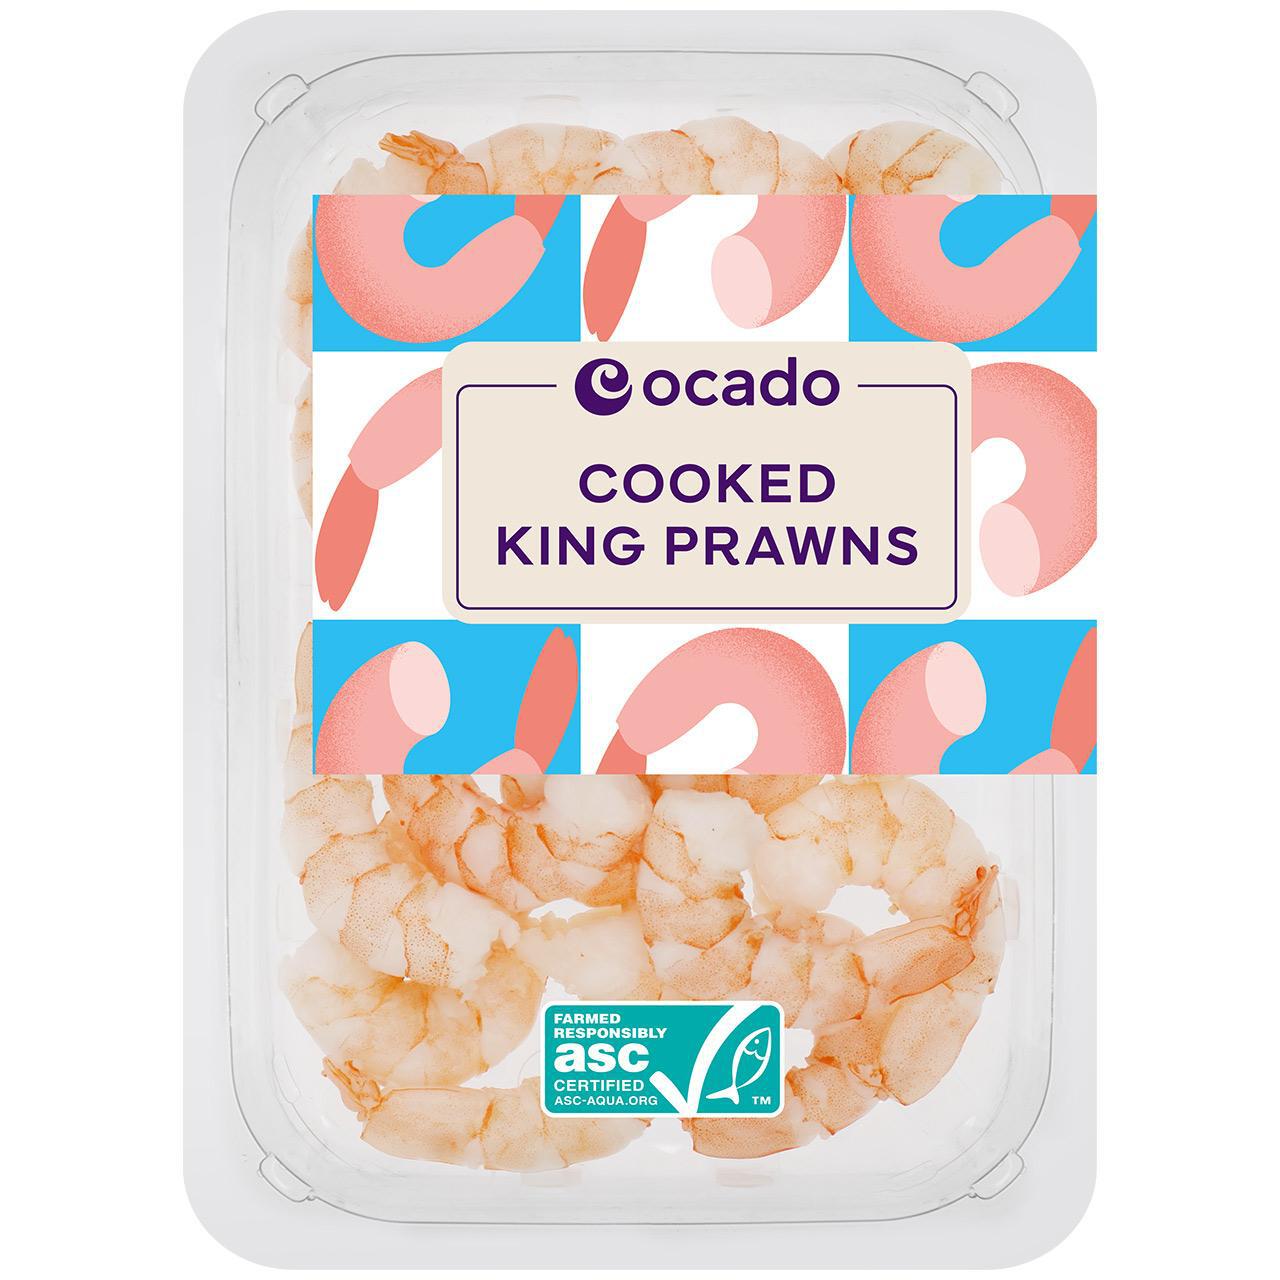 Ocado ASC Cooked King Prawns 150g